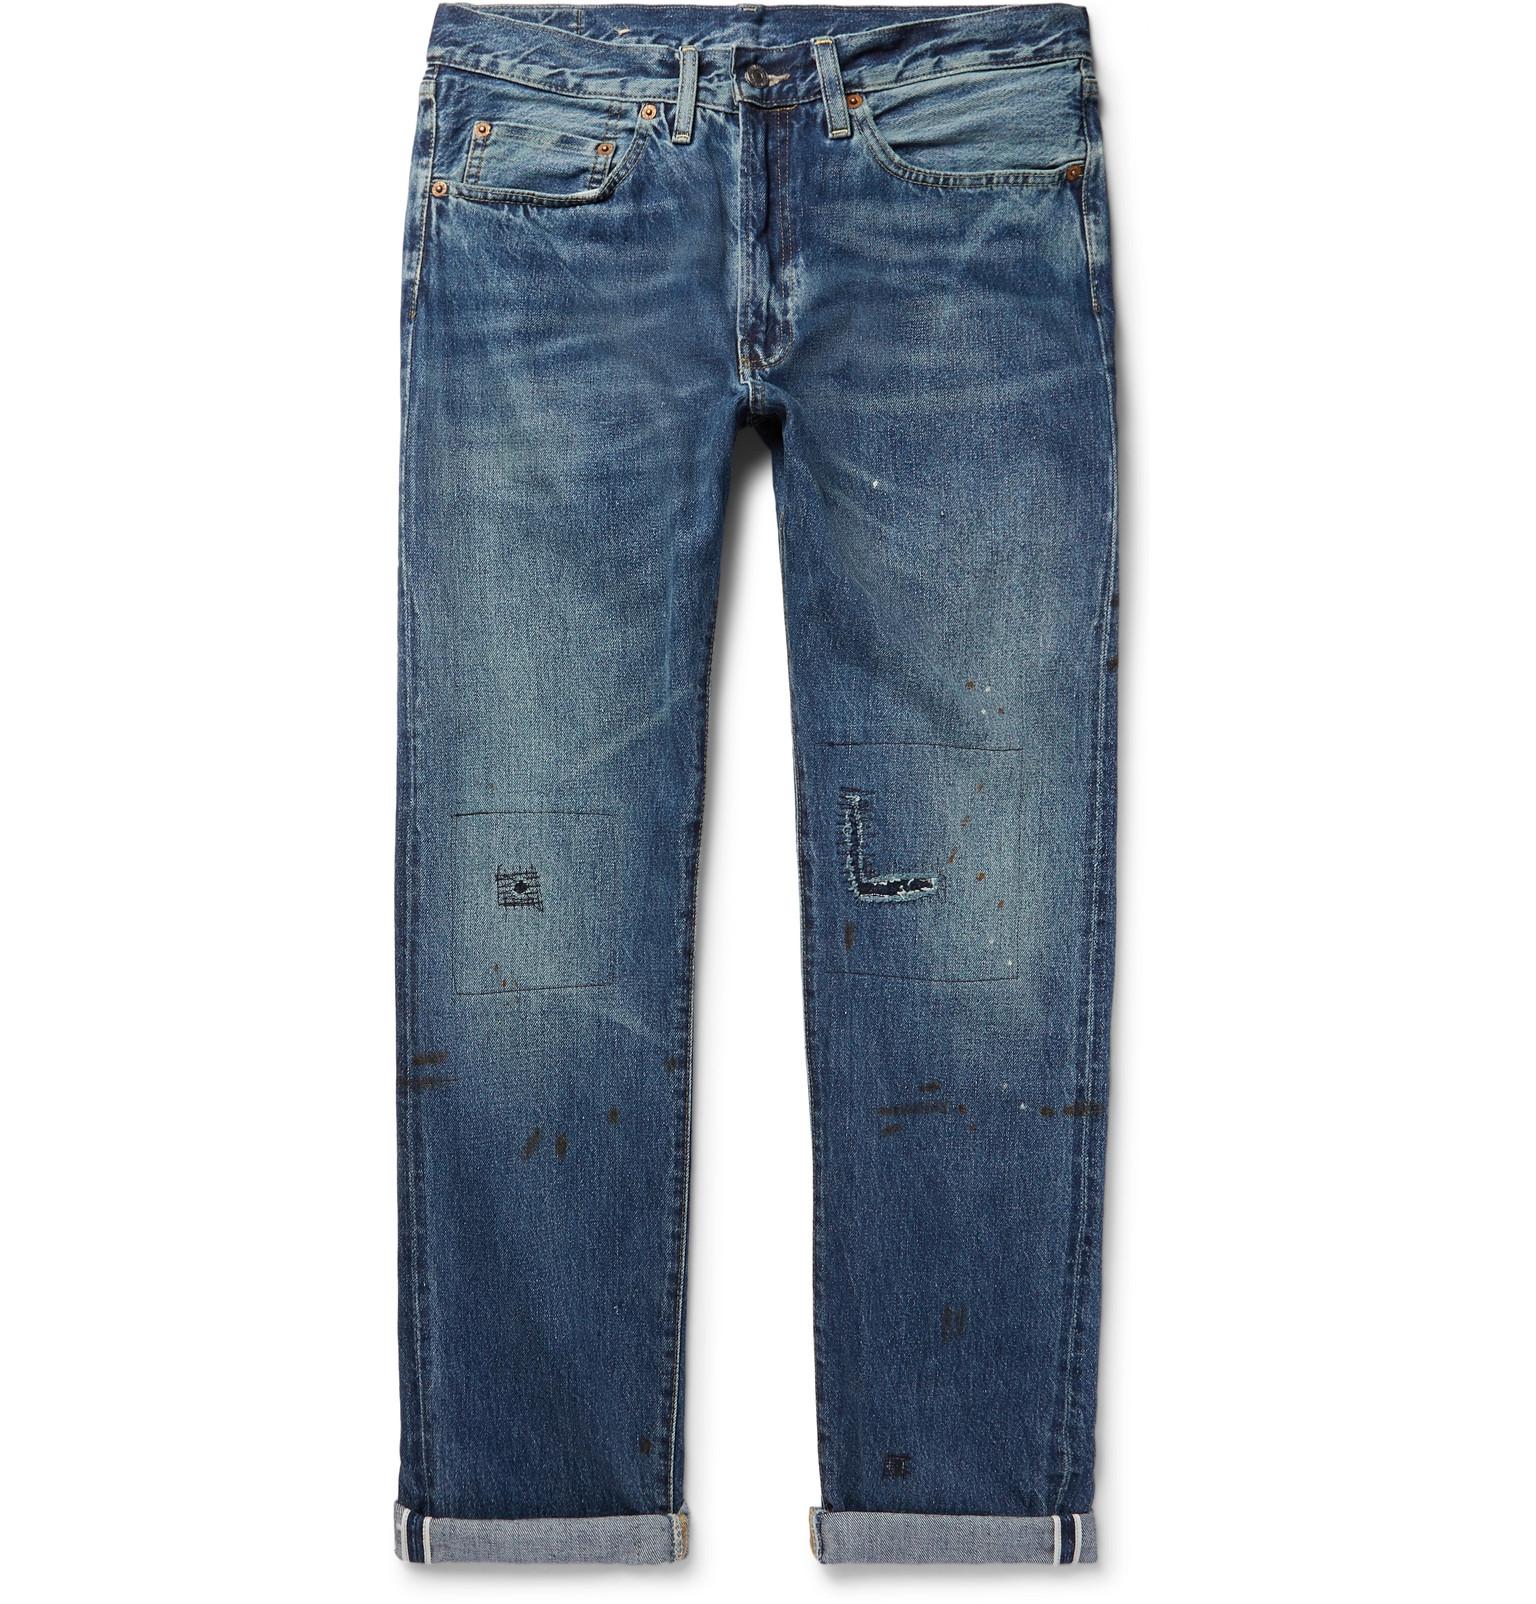 Levi's 1954 501 Distressed Selvedge Denim Jeans in Blue for Men - Lyst